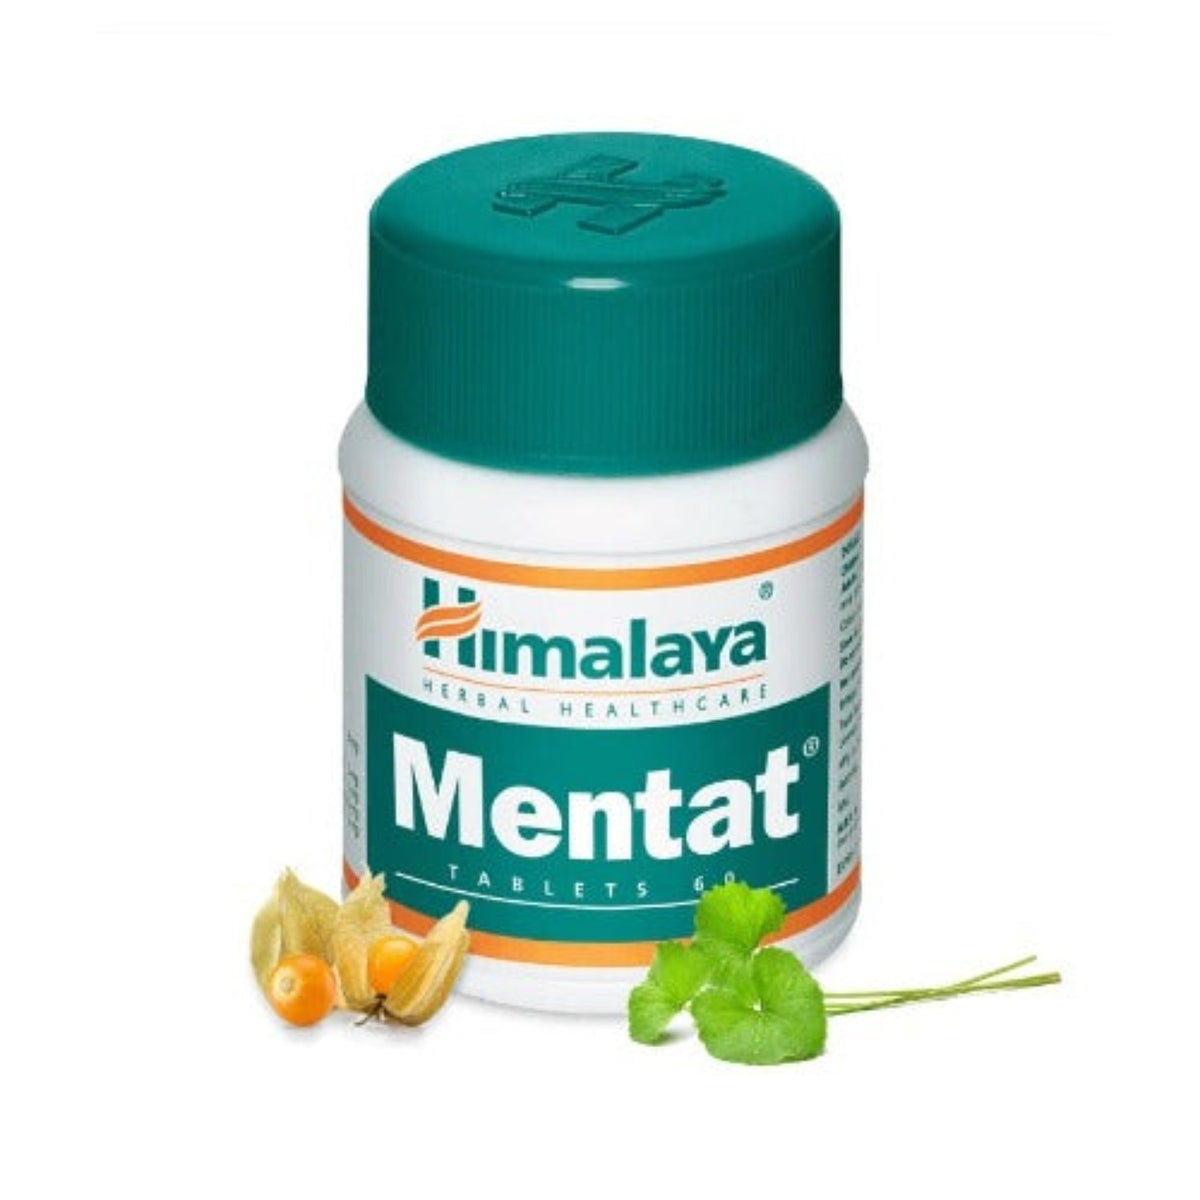 Himalaya Herbal Ayurvedic Mentat от тревоги, стресса и умственной усталости, 60 таблеток